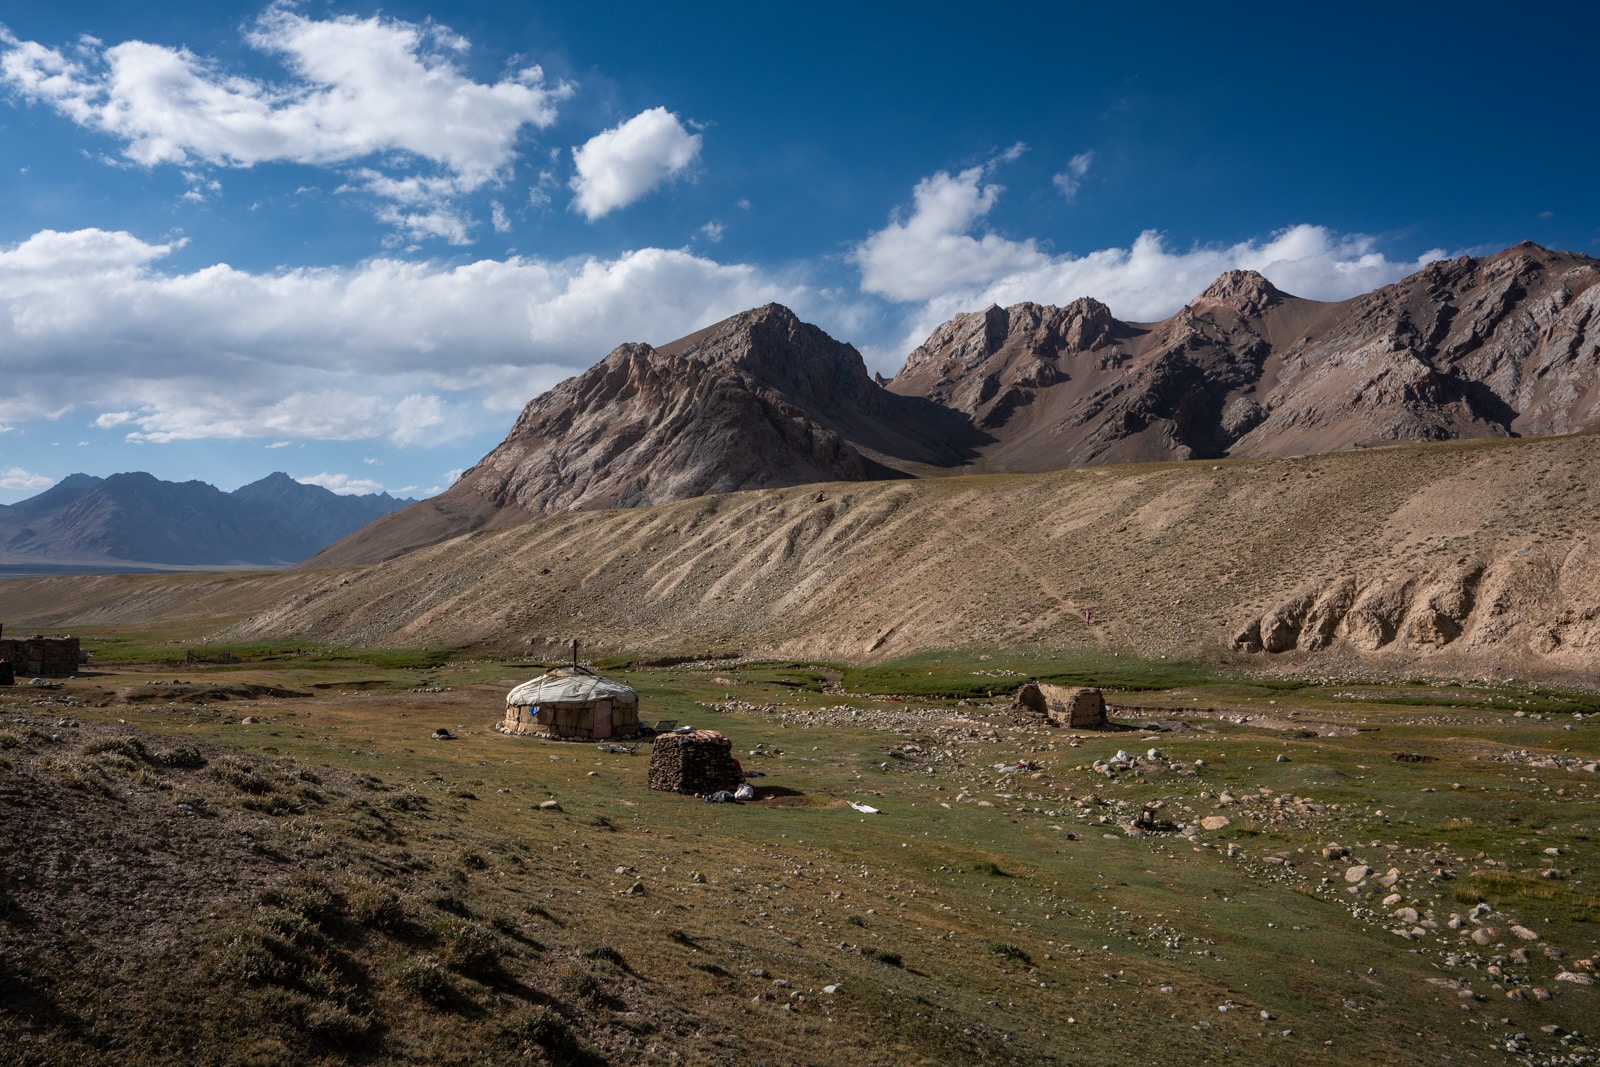 Kyrgyz yurts in Tajikistan